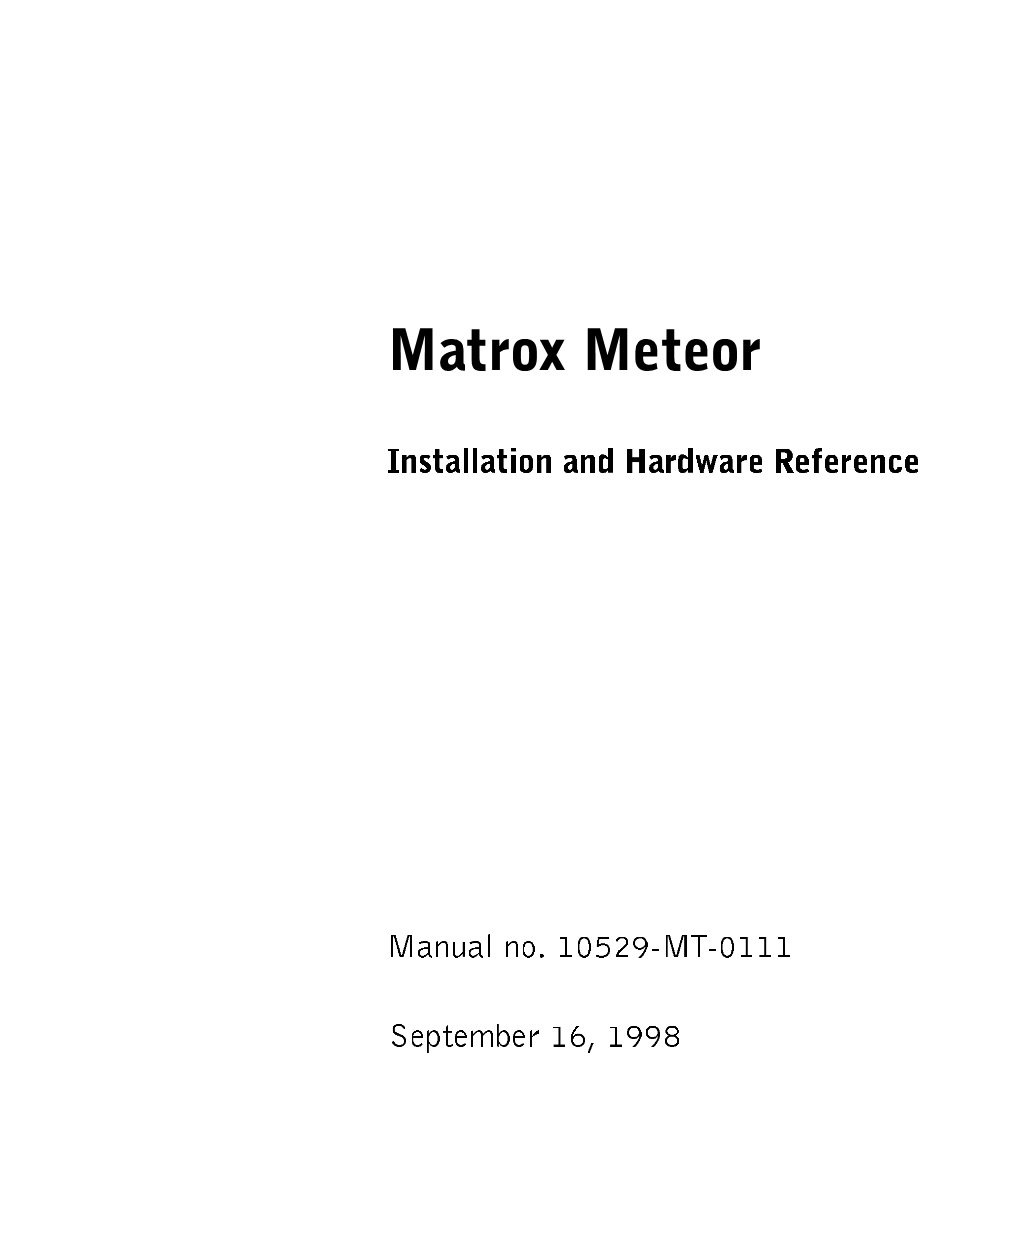 Using Matrox Meteor/RGB's Trigger Input Capability